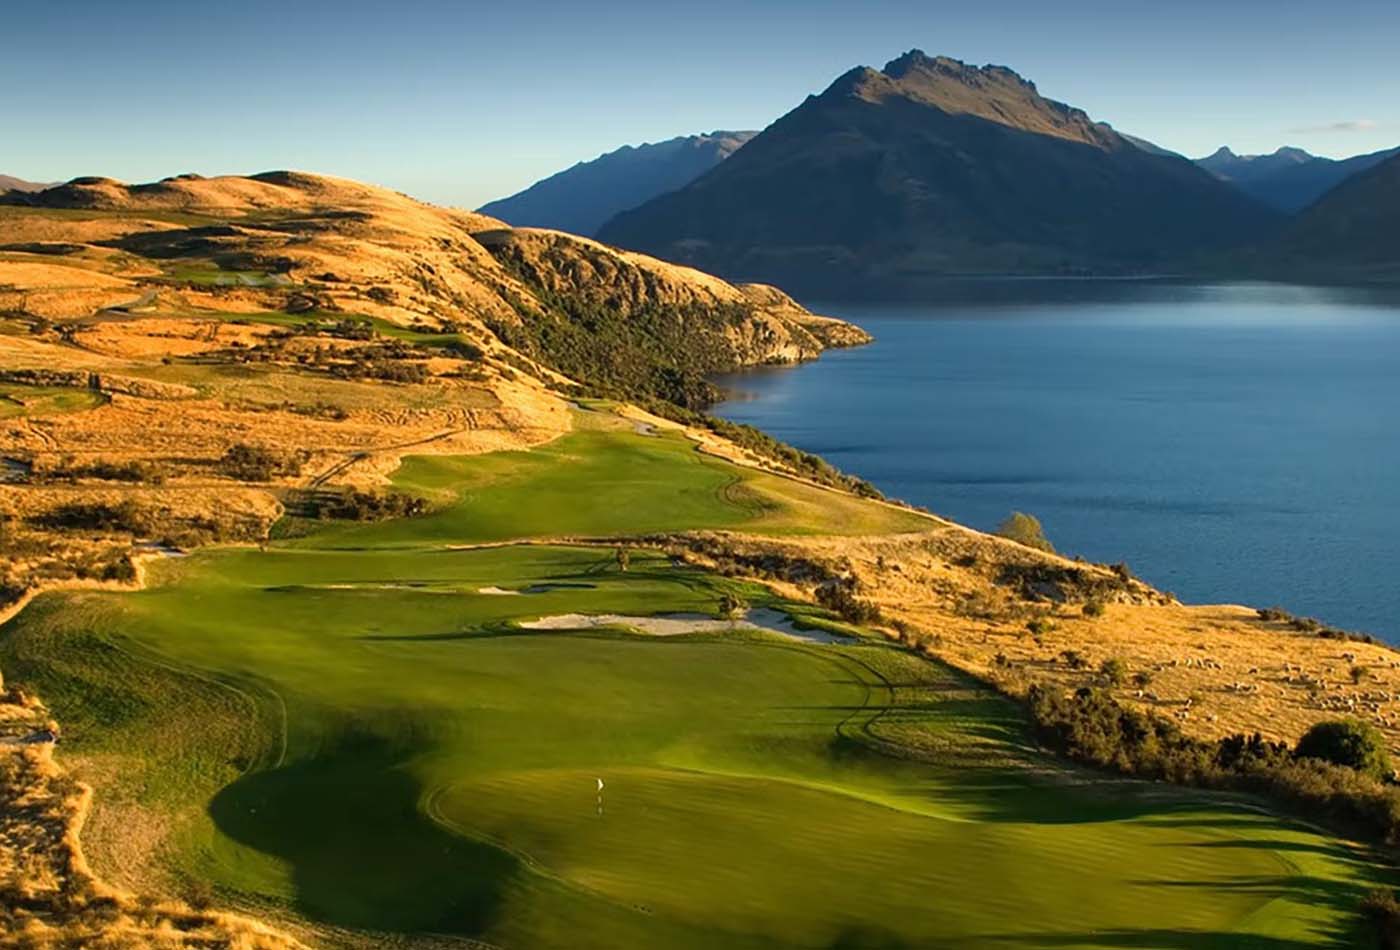 View of golf course set into a mountain